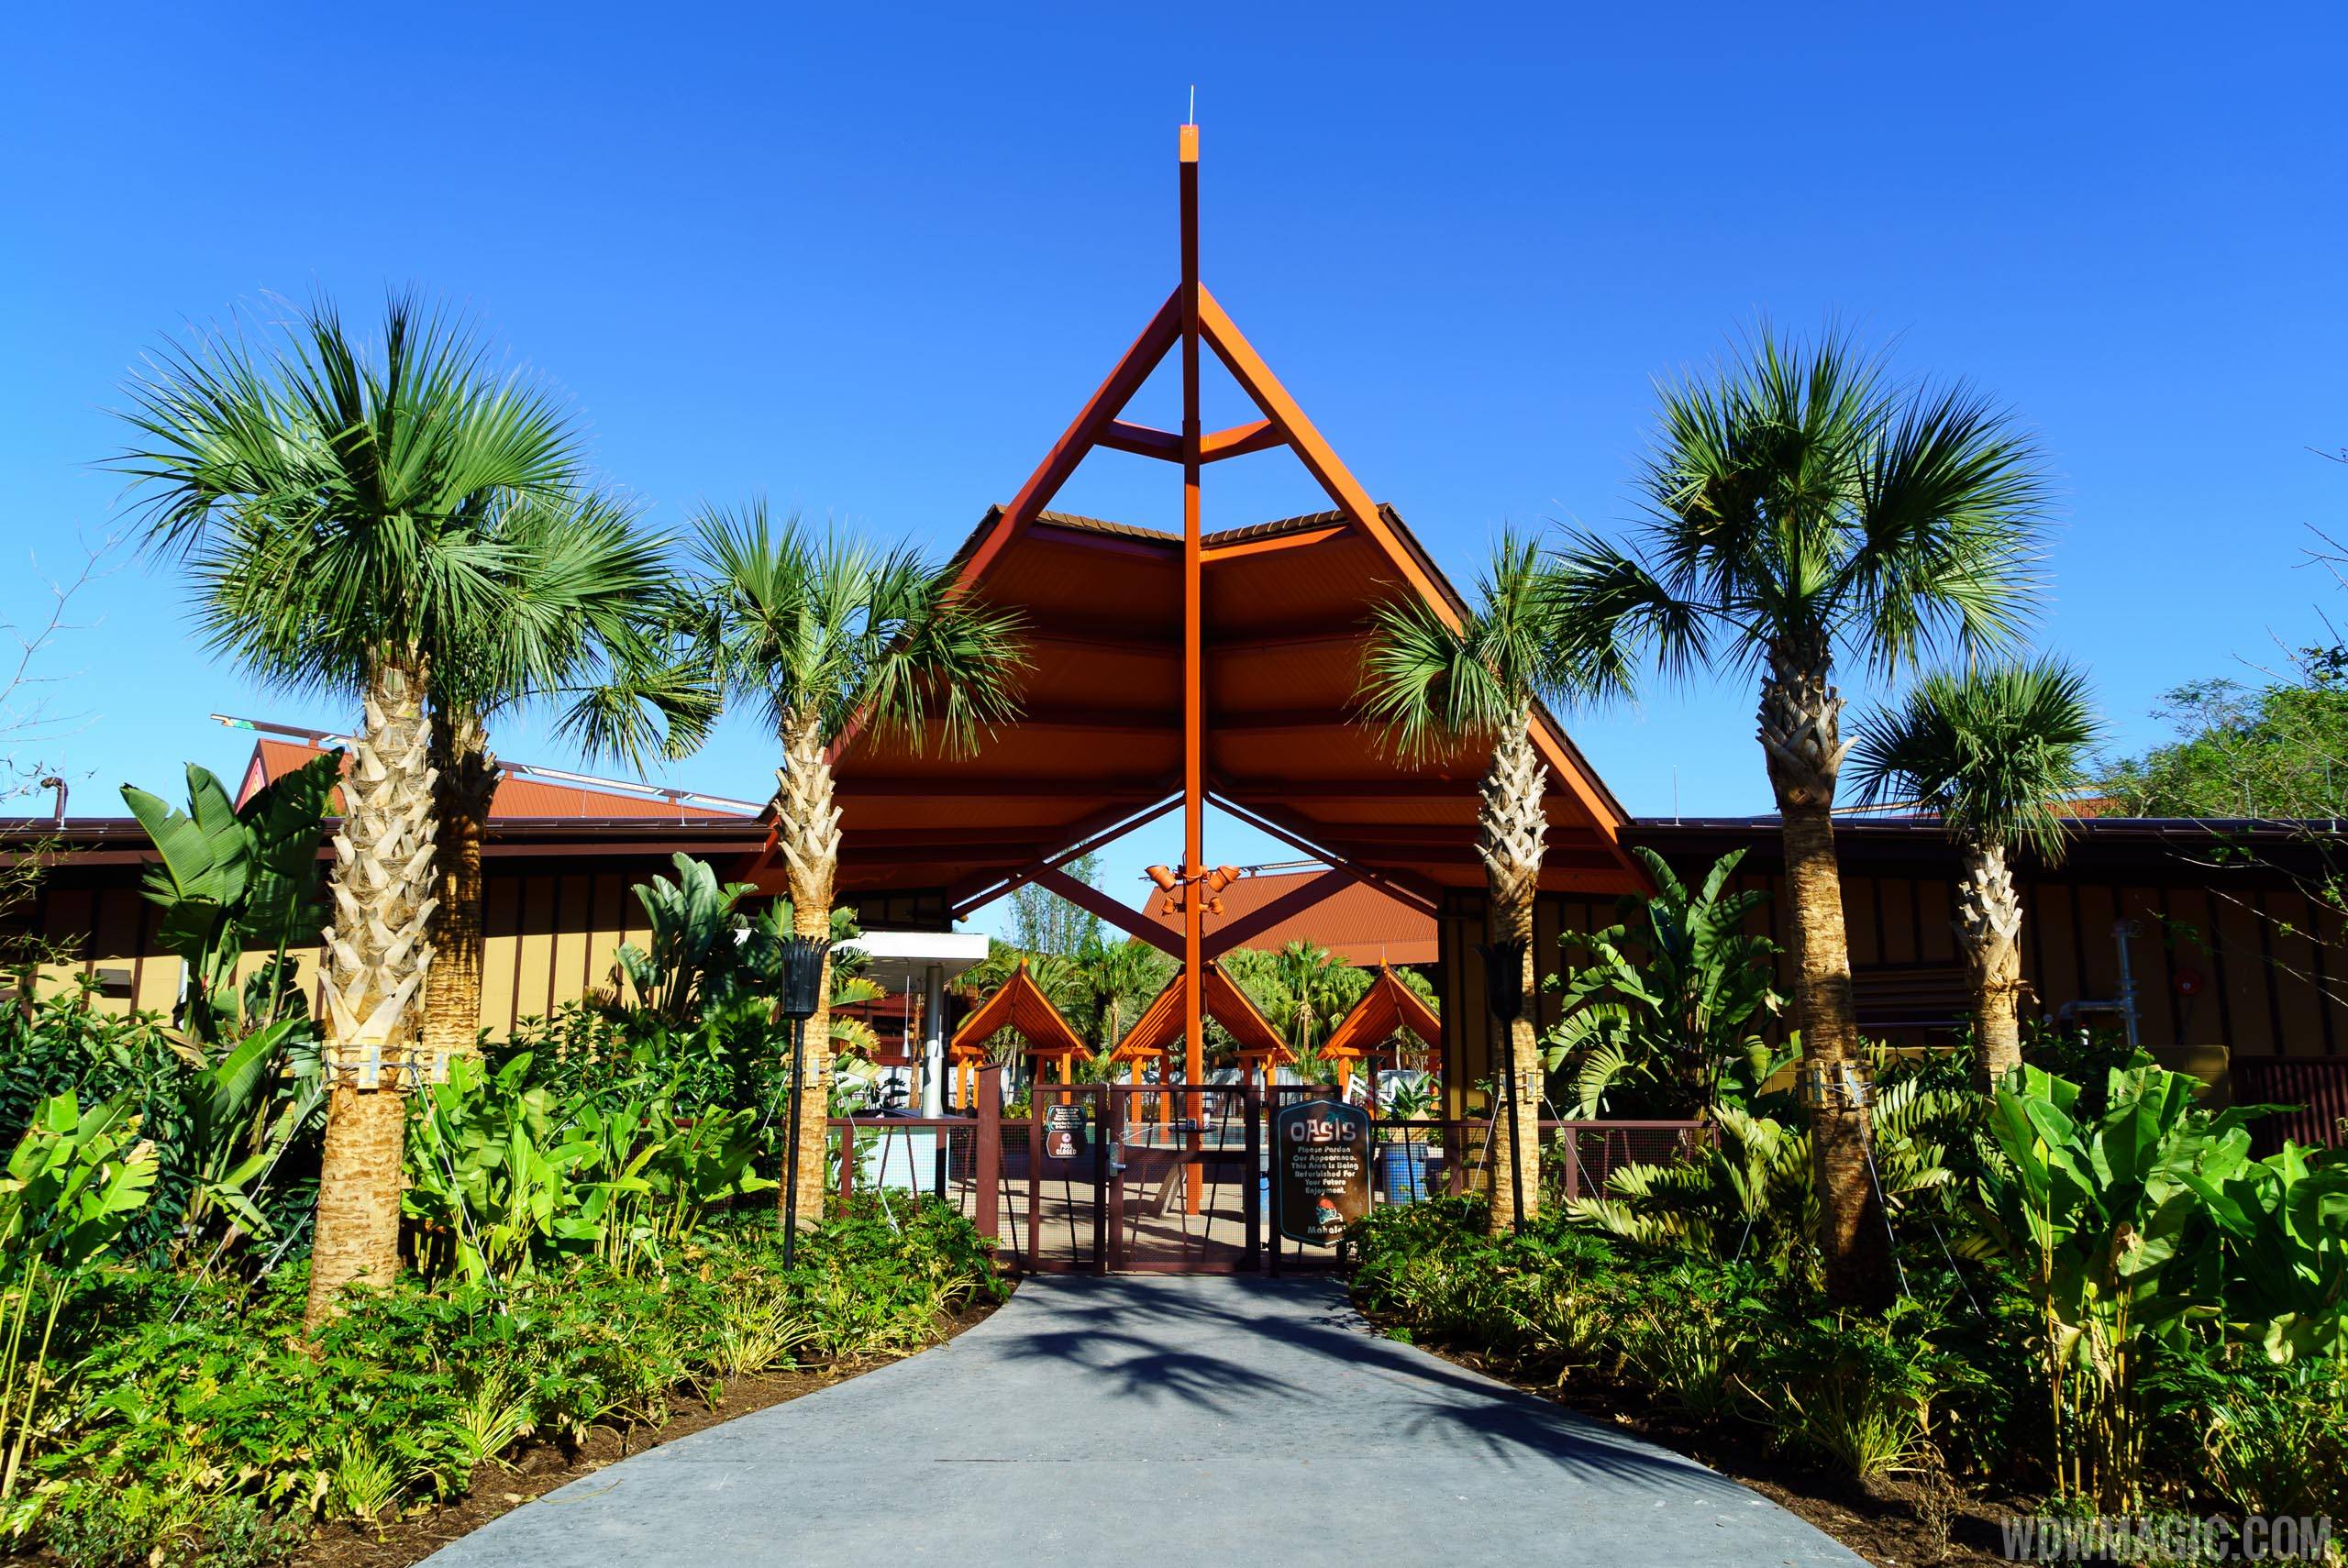 PHOTOS - Oasis Pool area nears completion at Disney's Polynesian Village Resort